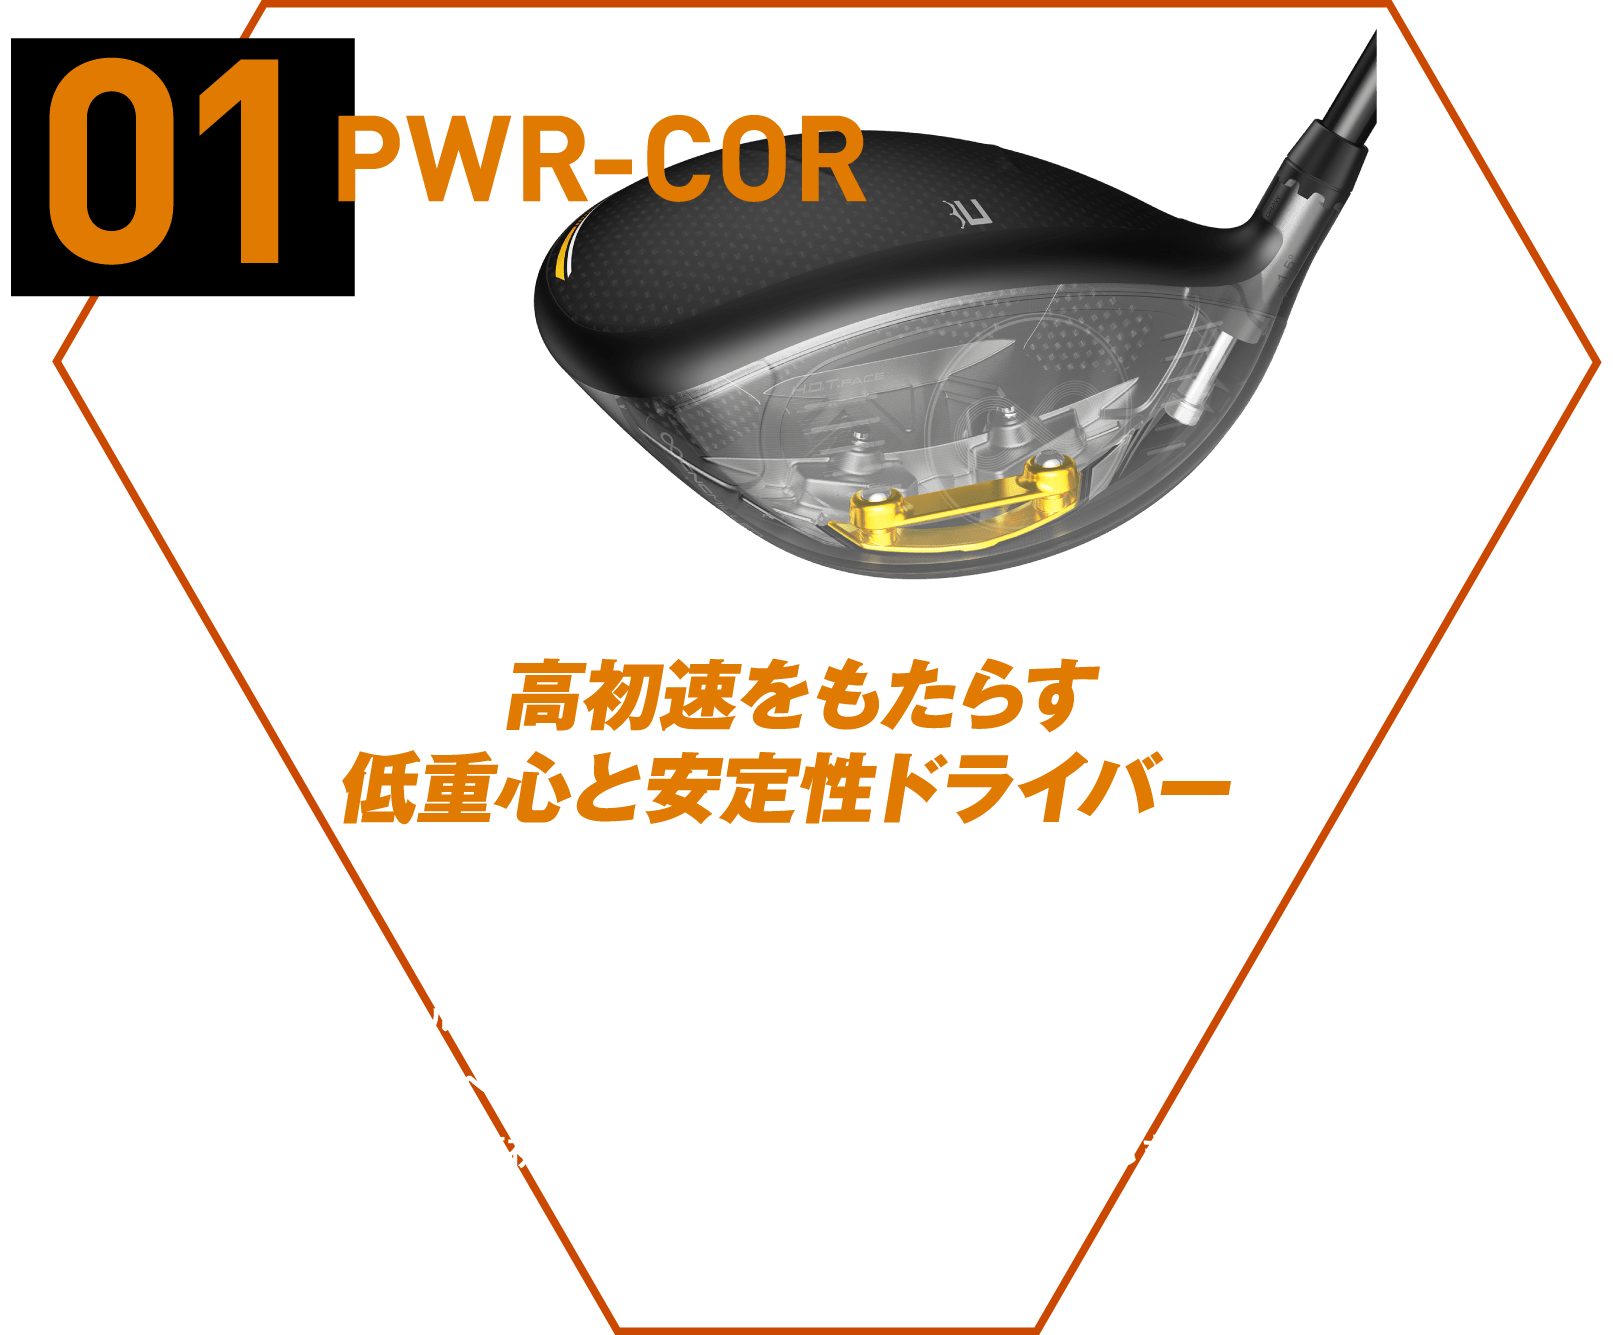 01 PWR-COR